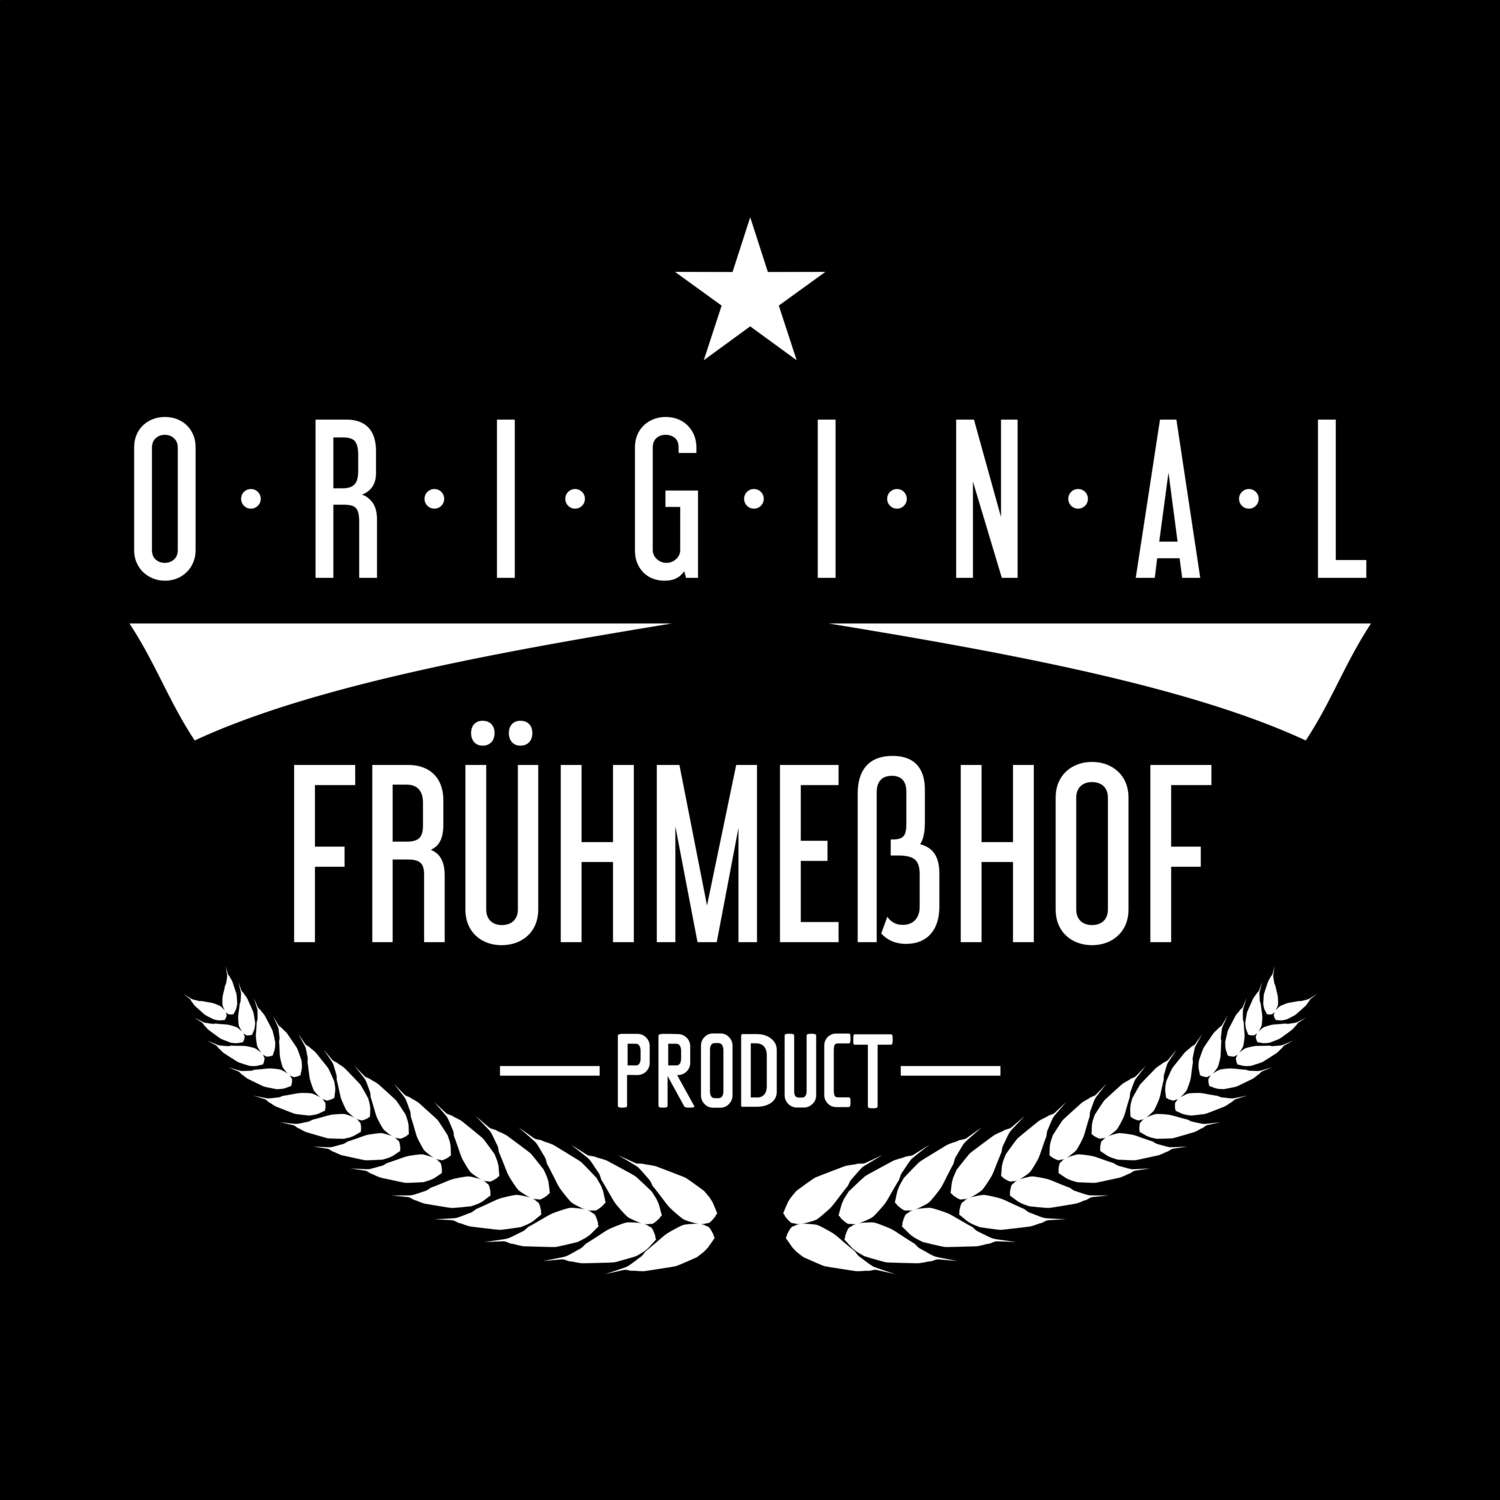 Frühmeßhof T-Shirt »Original Product«